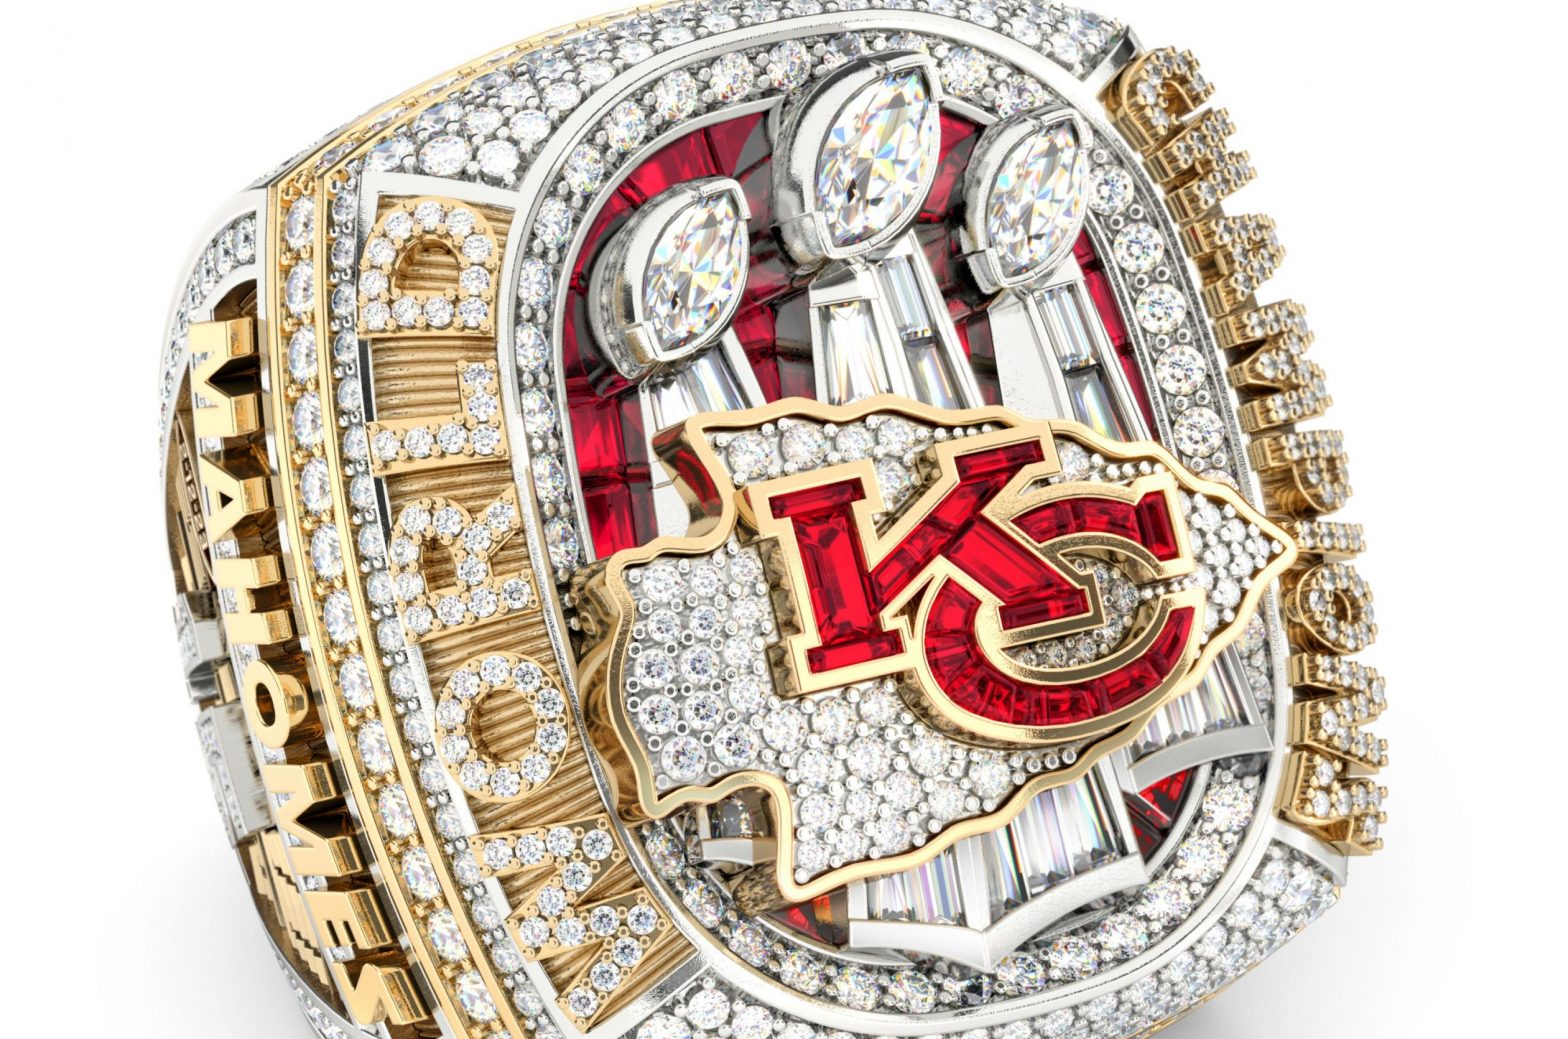 Kansas City Chiefs Super Bowl ring details Cost, rubies, replica